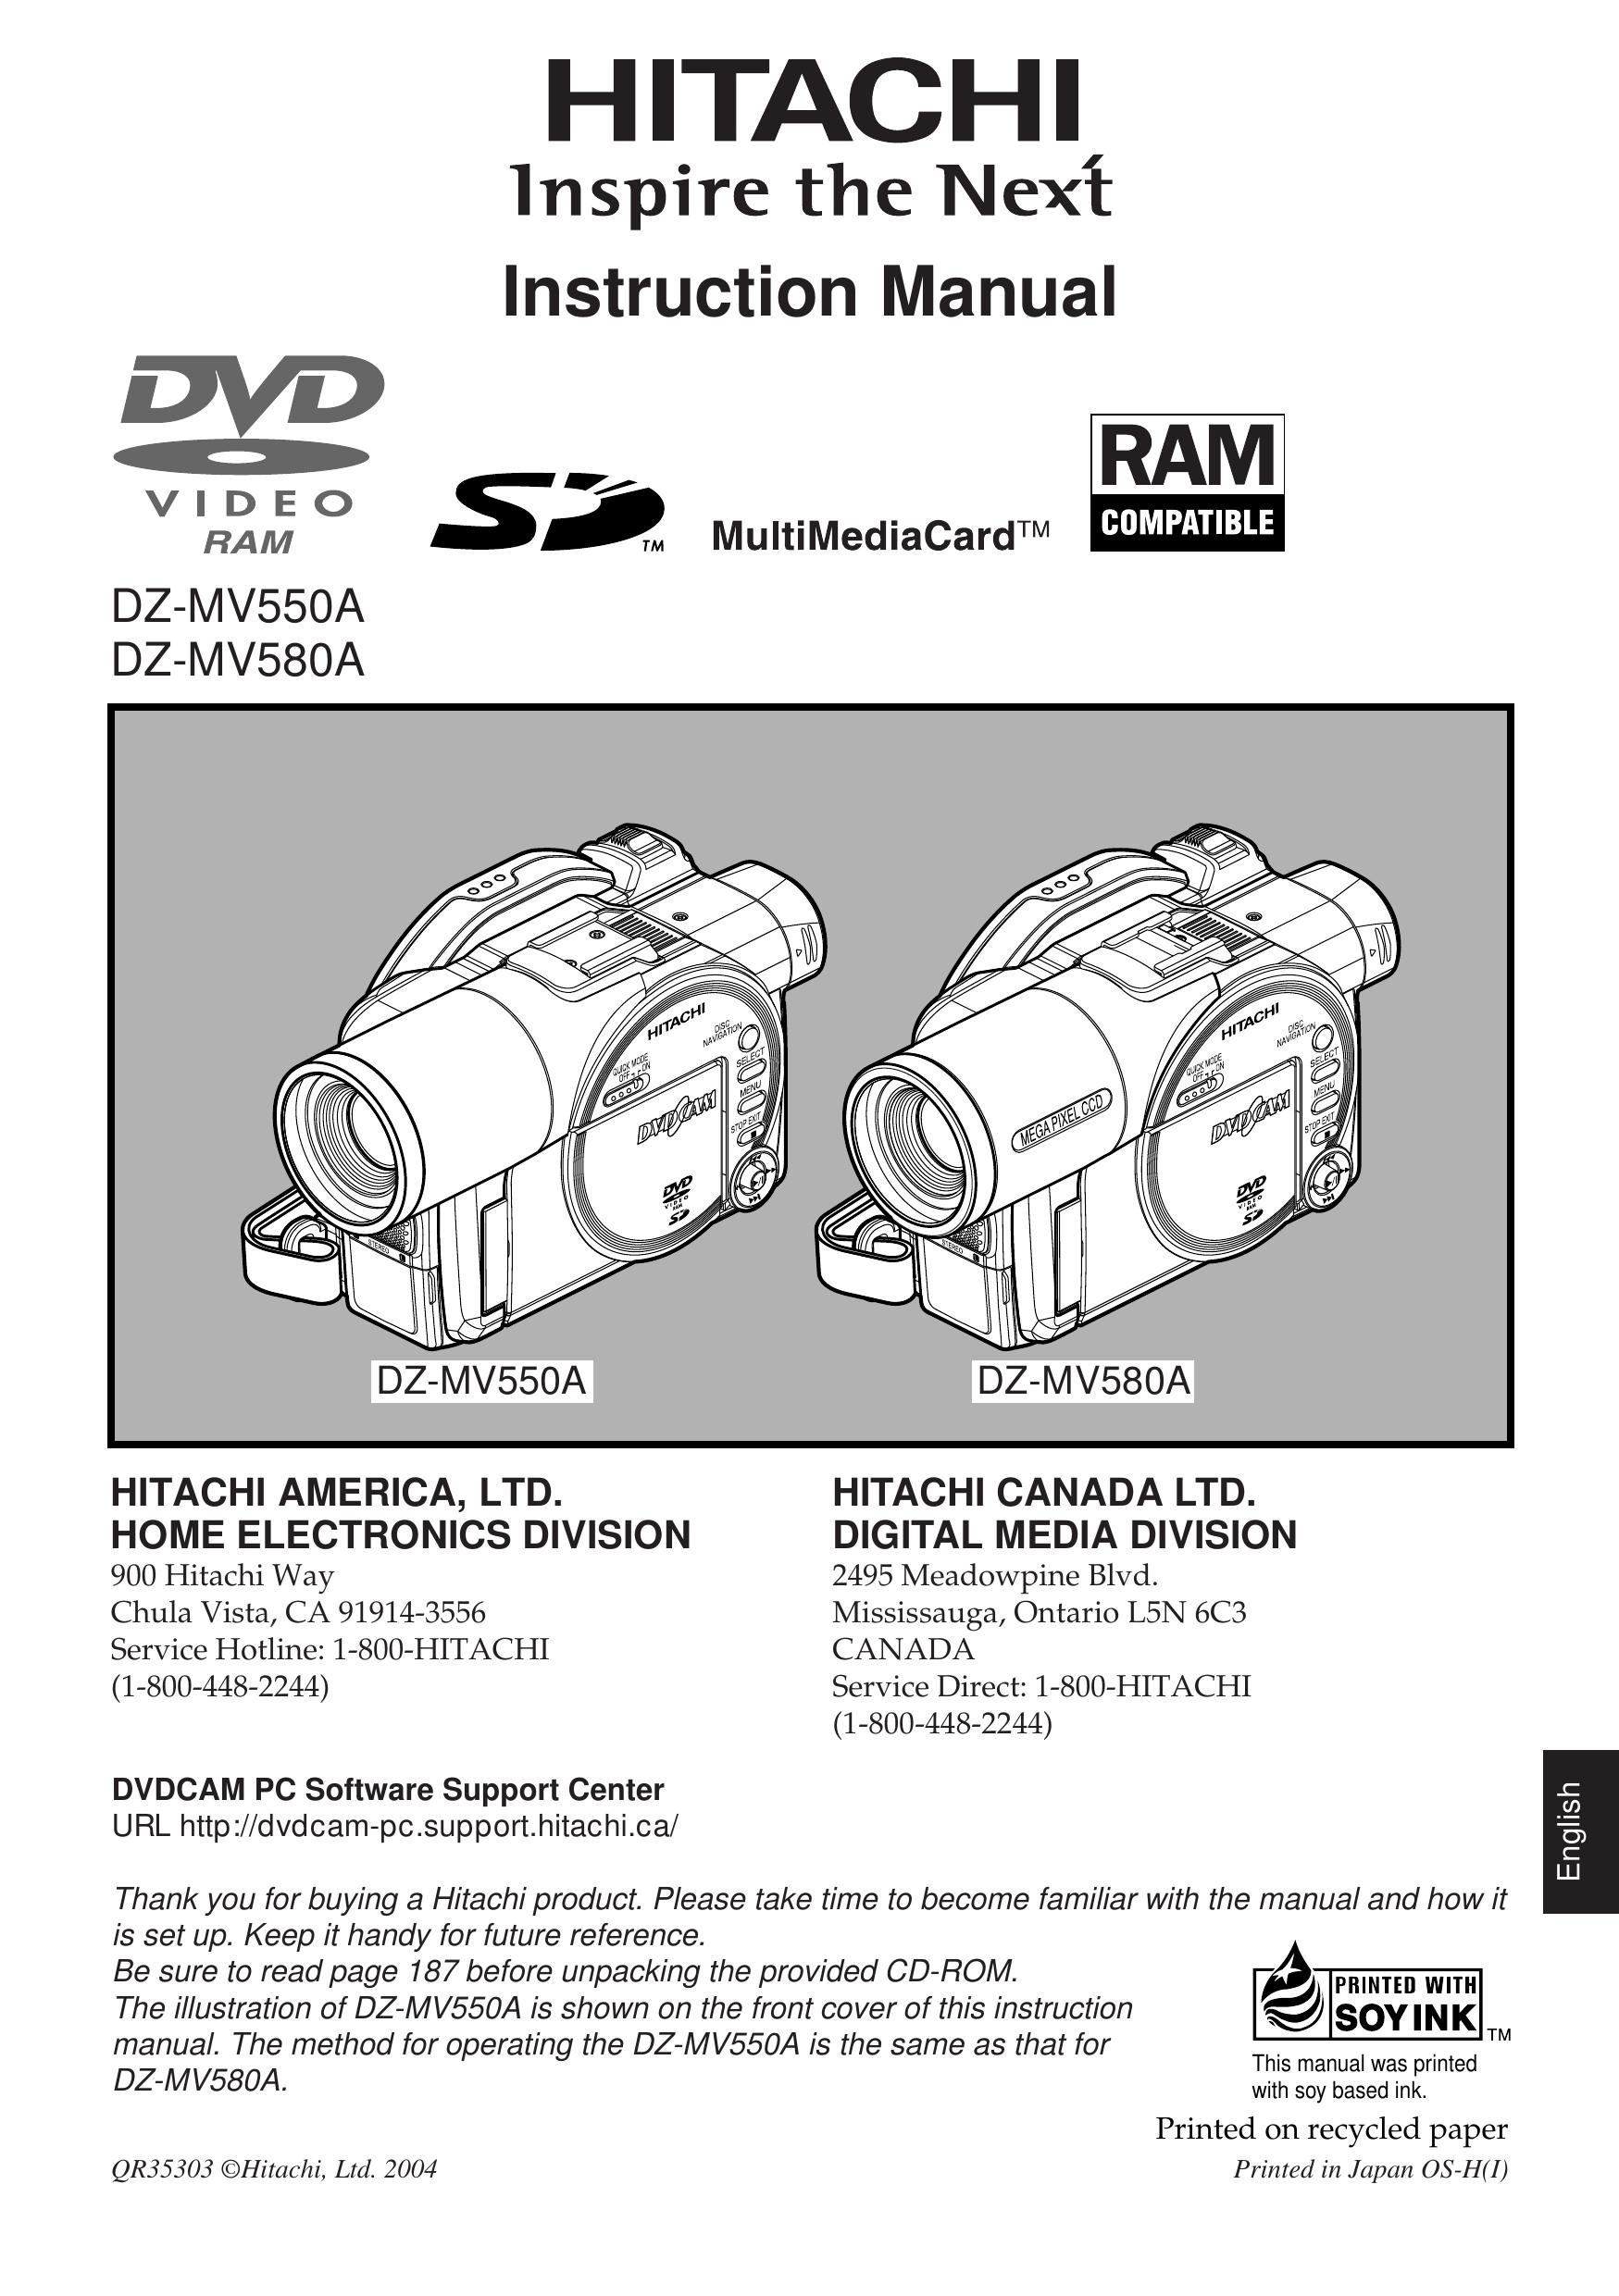 Hitachi DZMV580A Camcorder User Manual